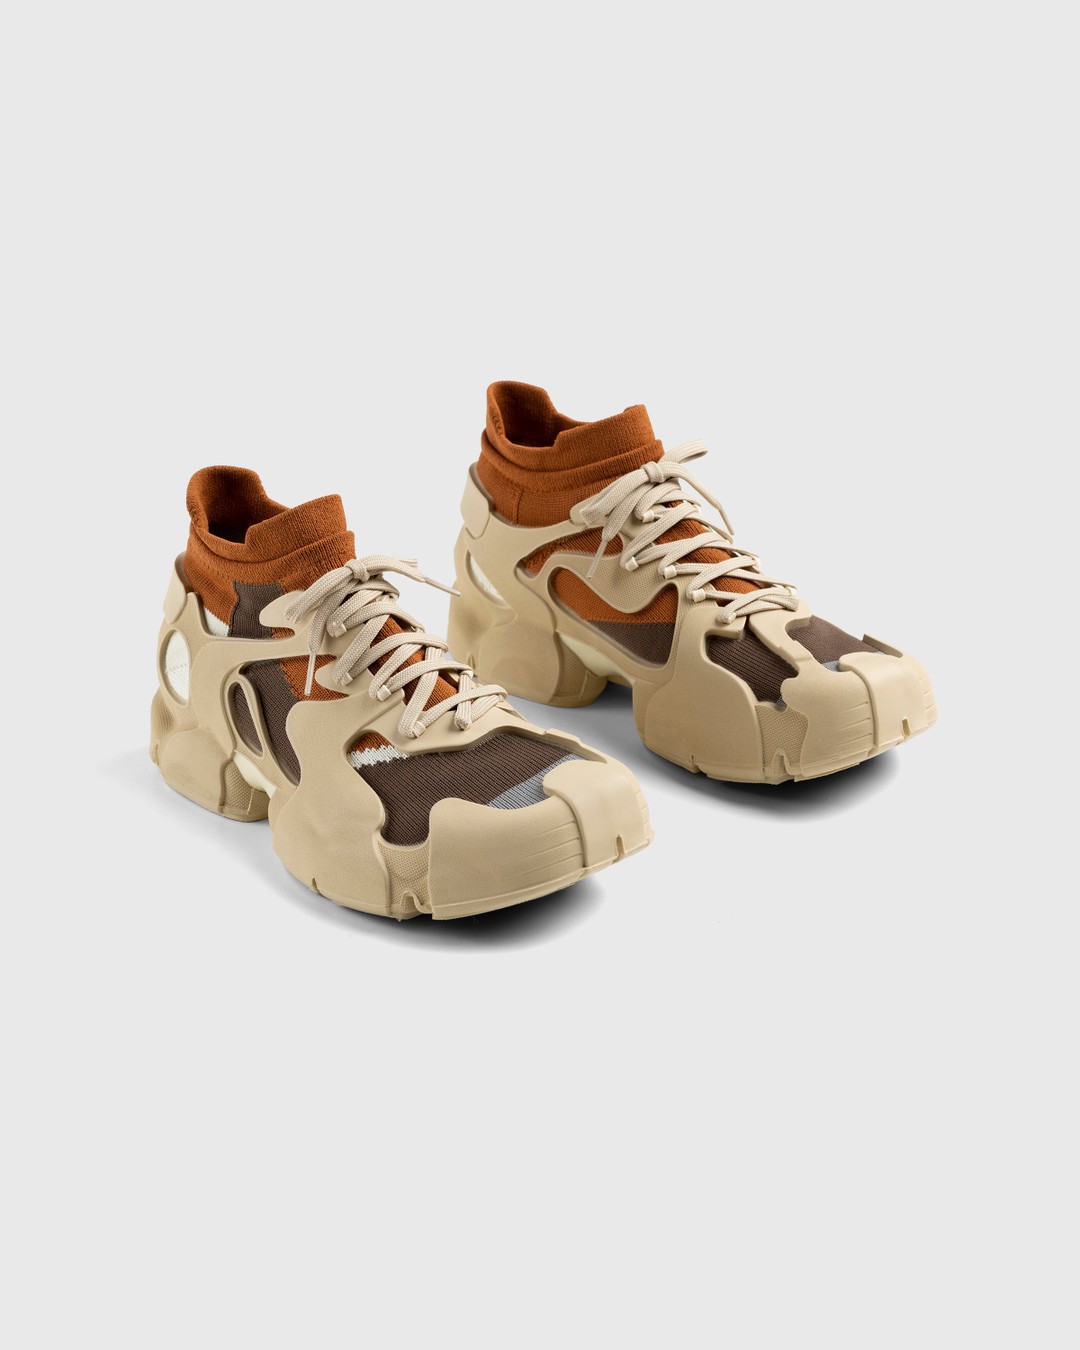 CAMPERLAB – Tossu Botijo-Fax-Oleo - Sneakers - Brown - Image 2